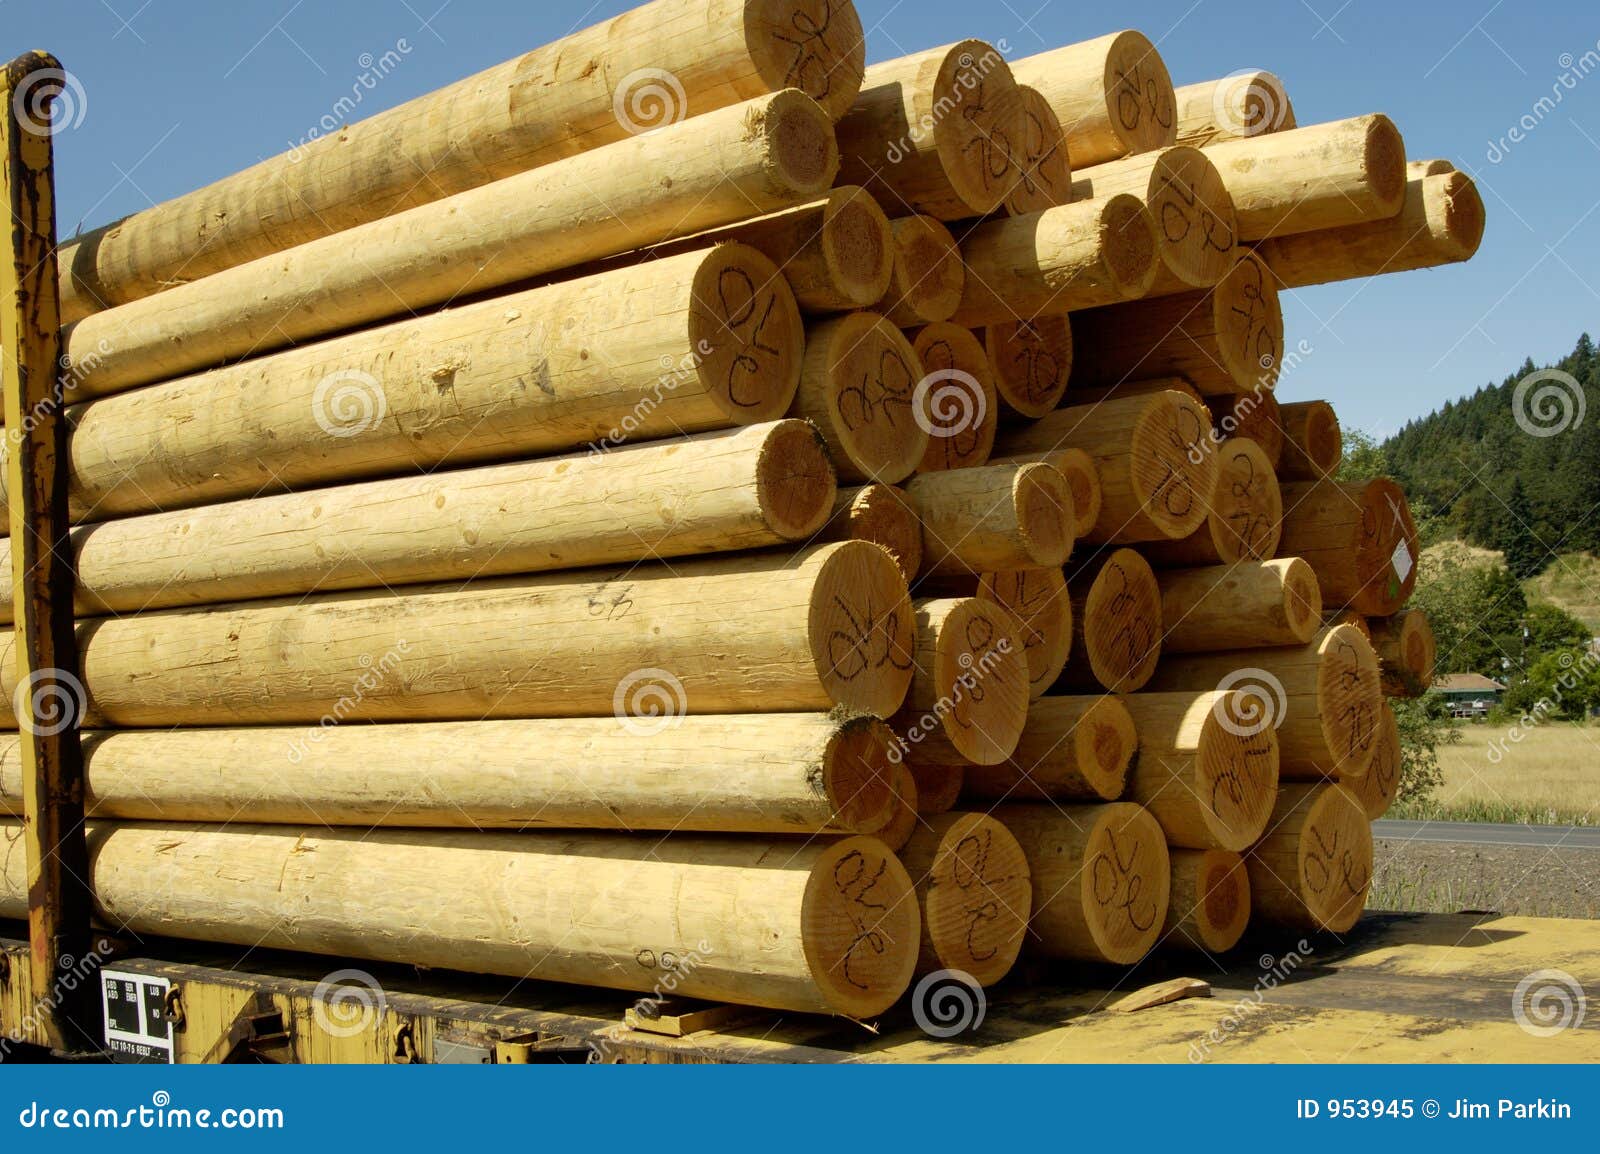 wood poles 2